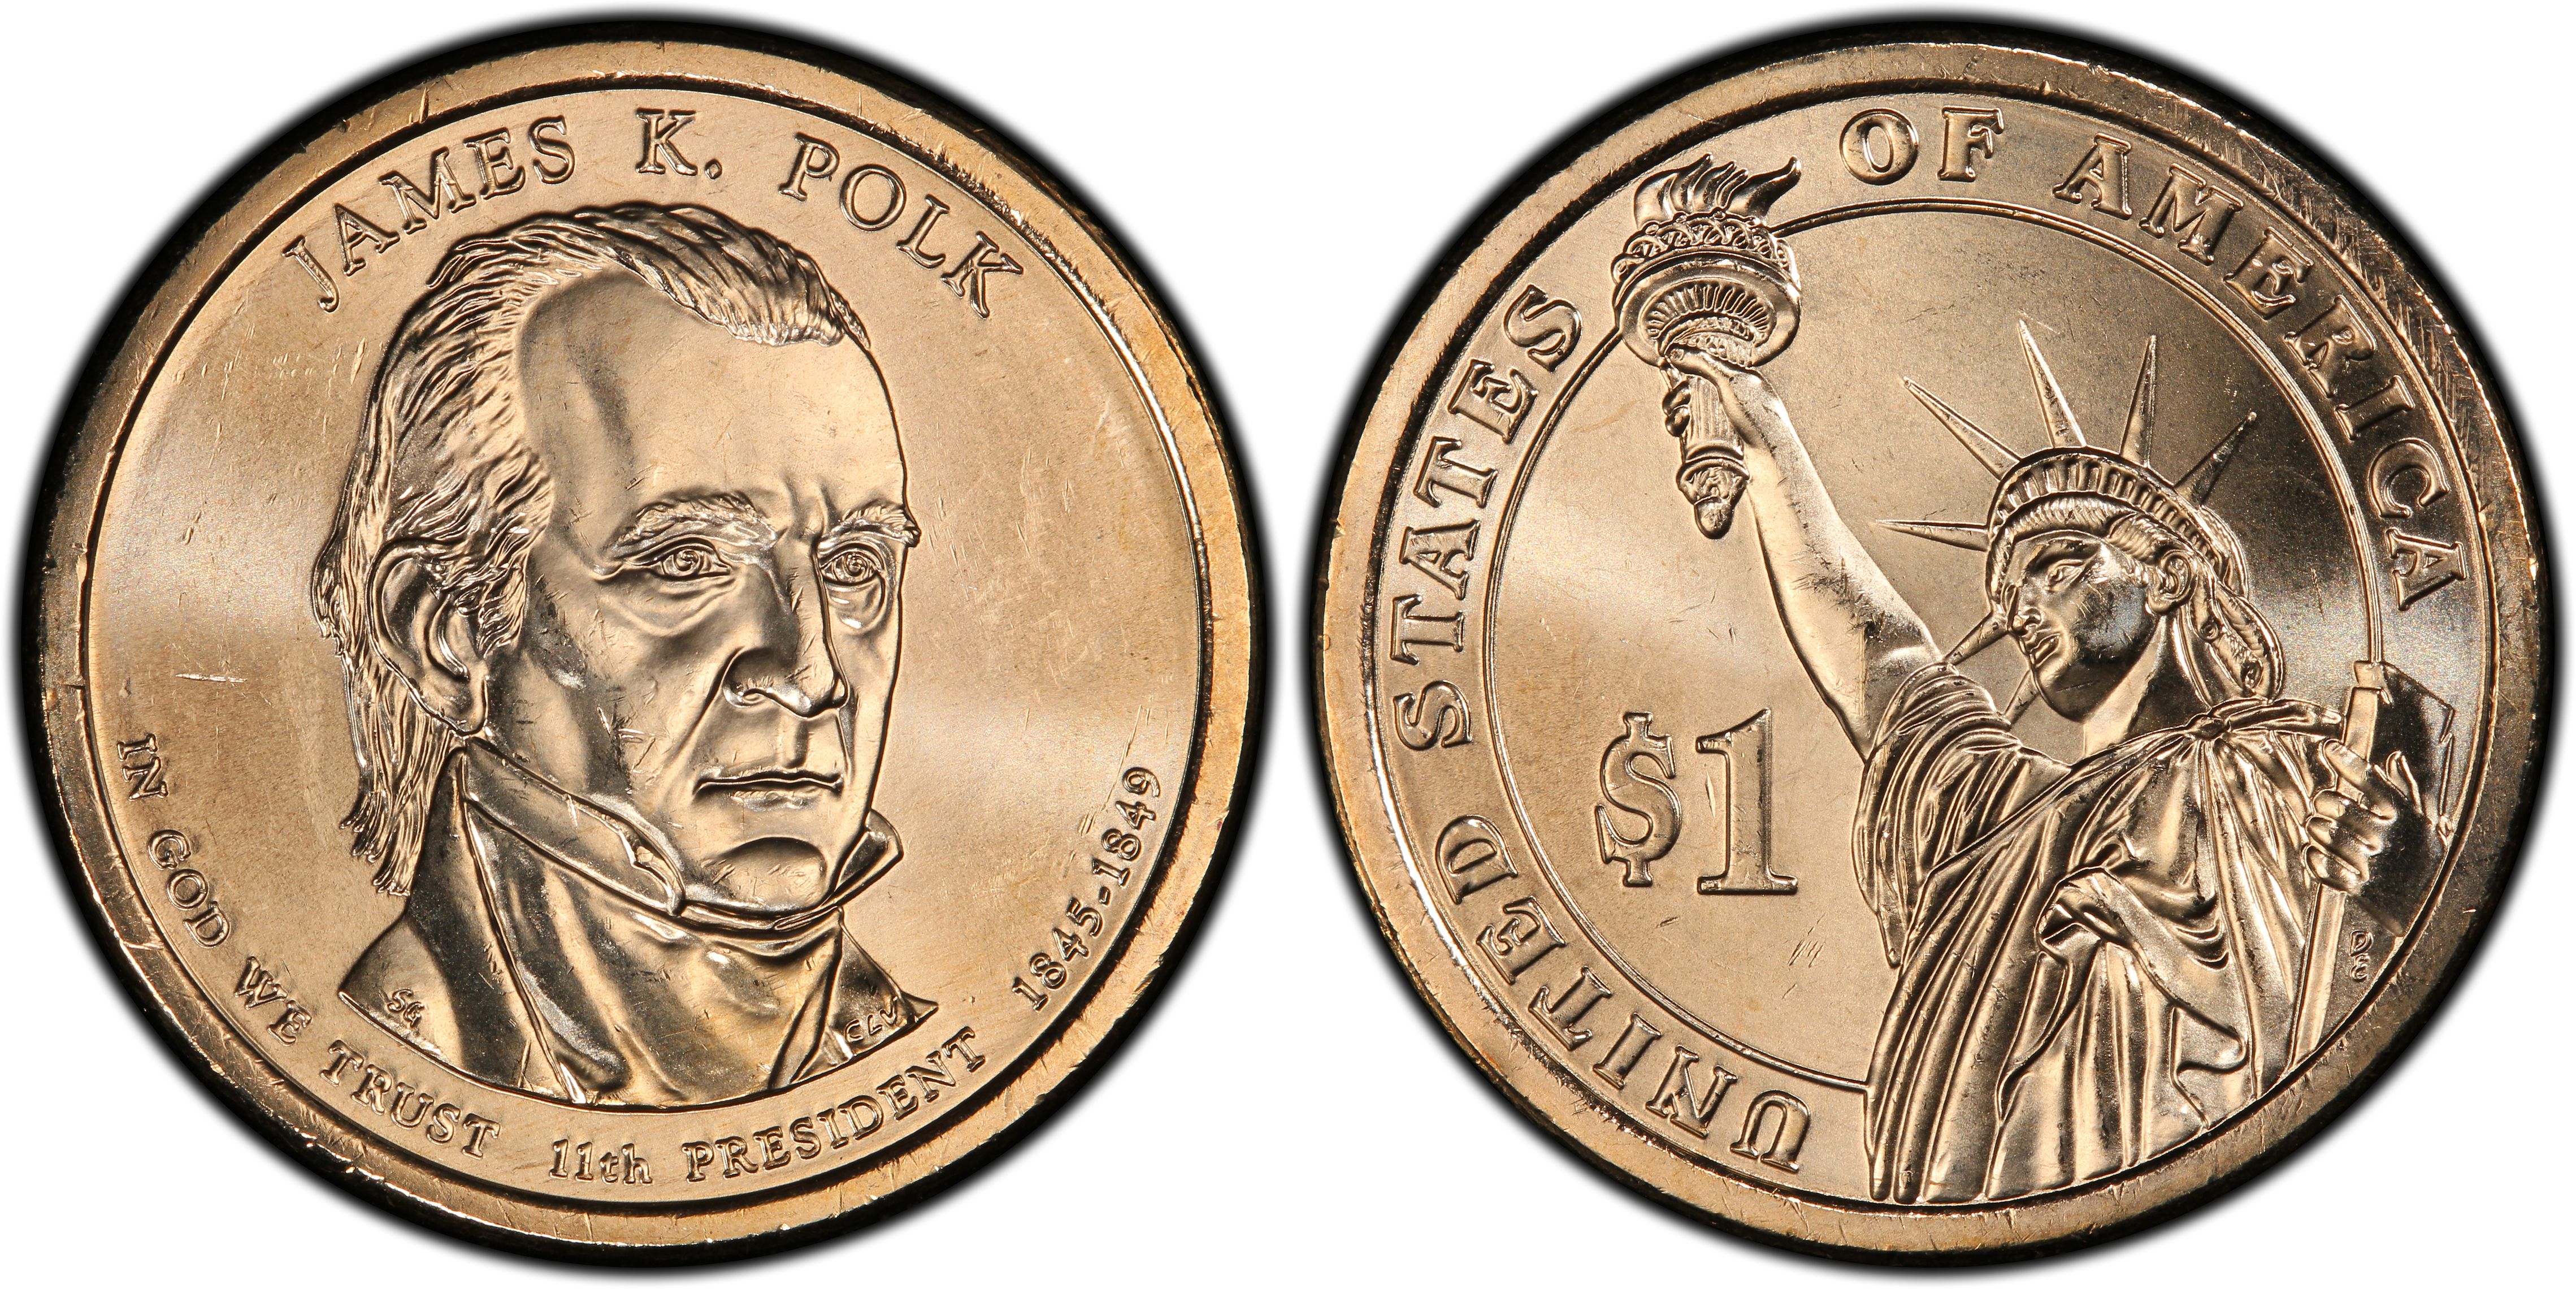 2009 D US Dollar Coin James K Polk in BU Condition